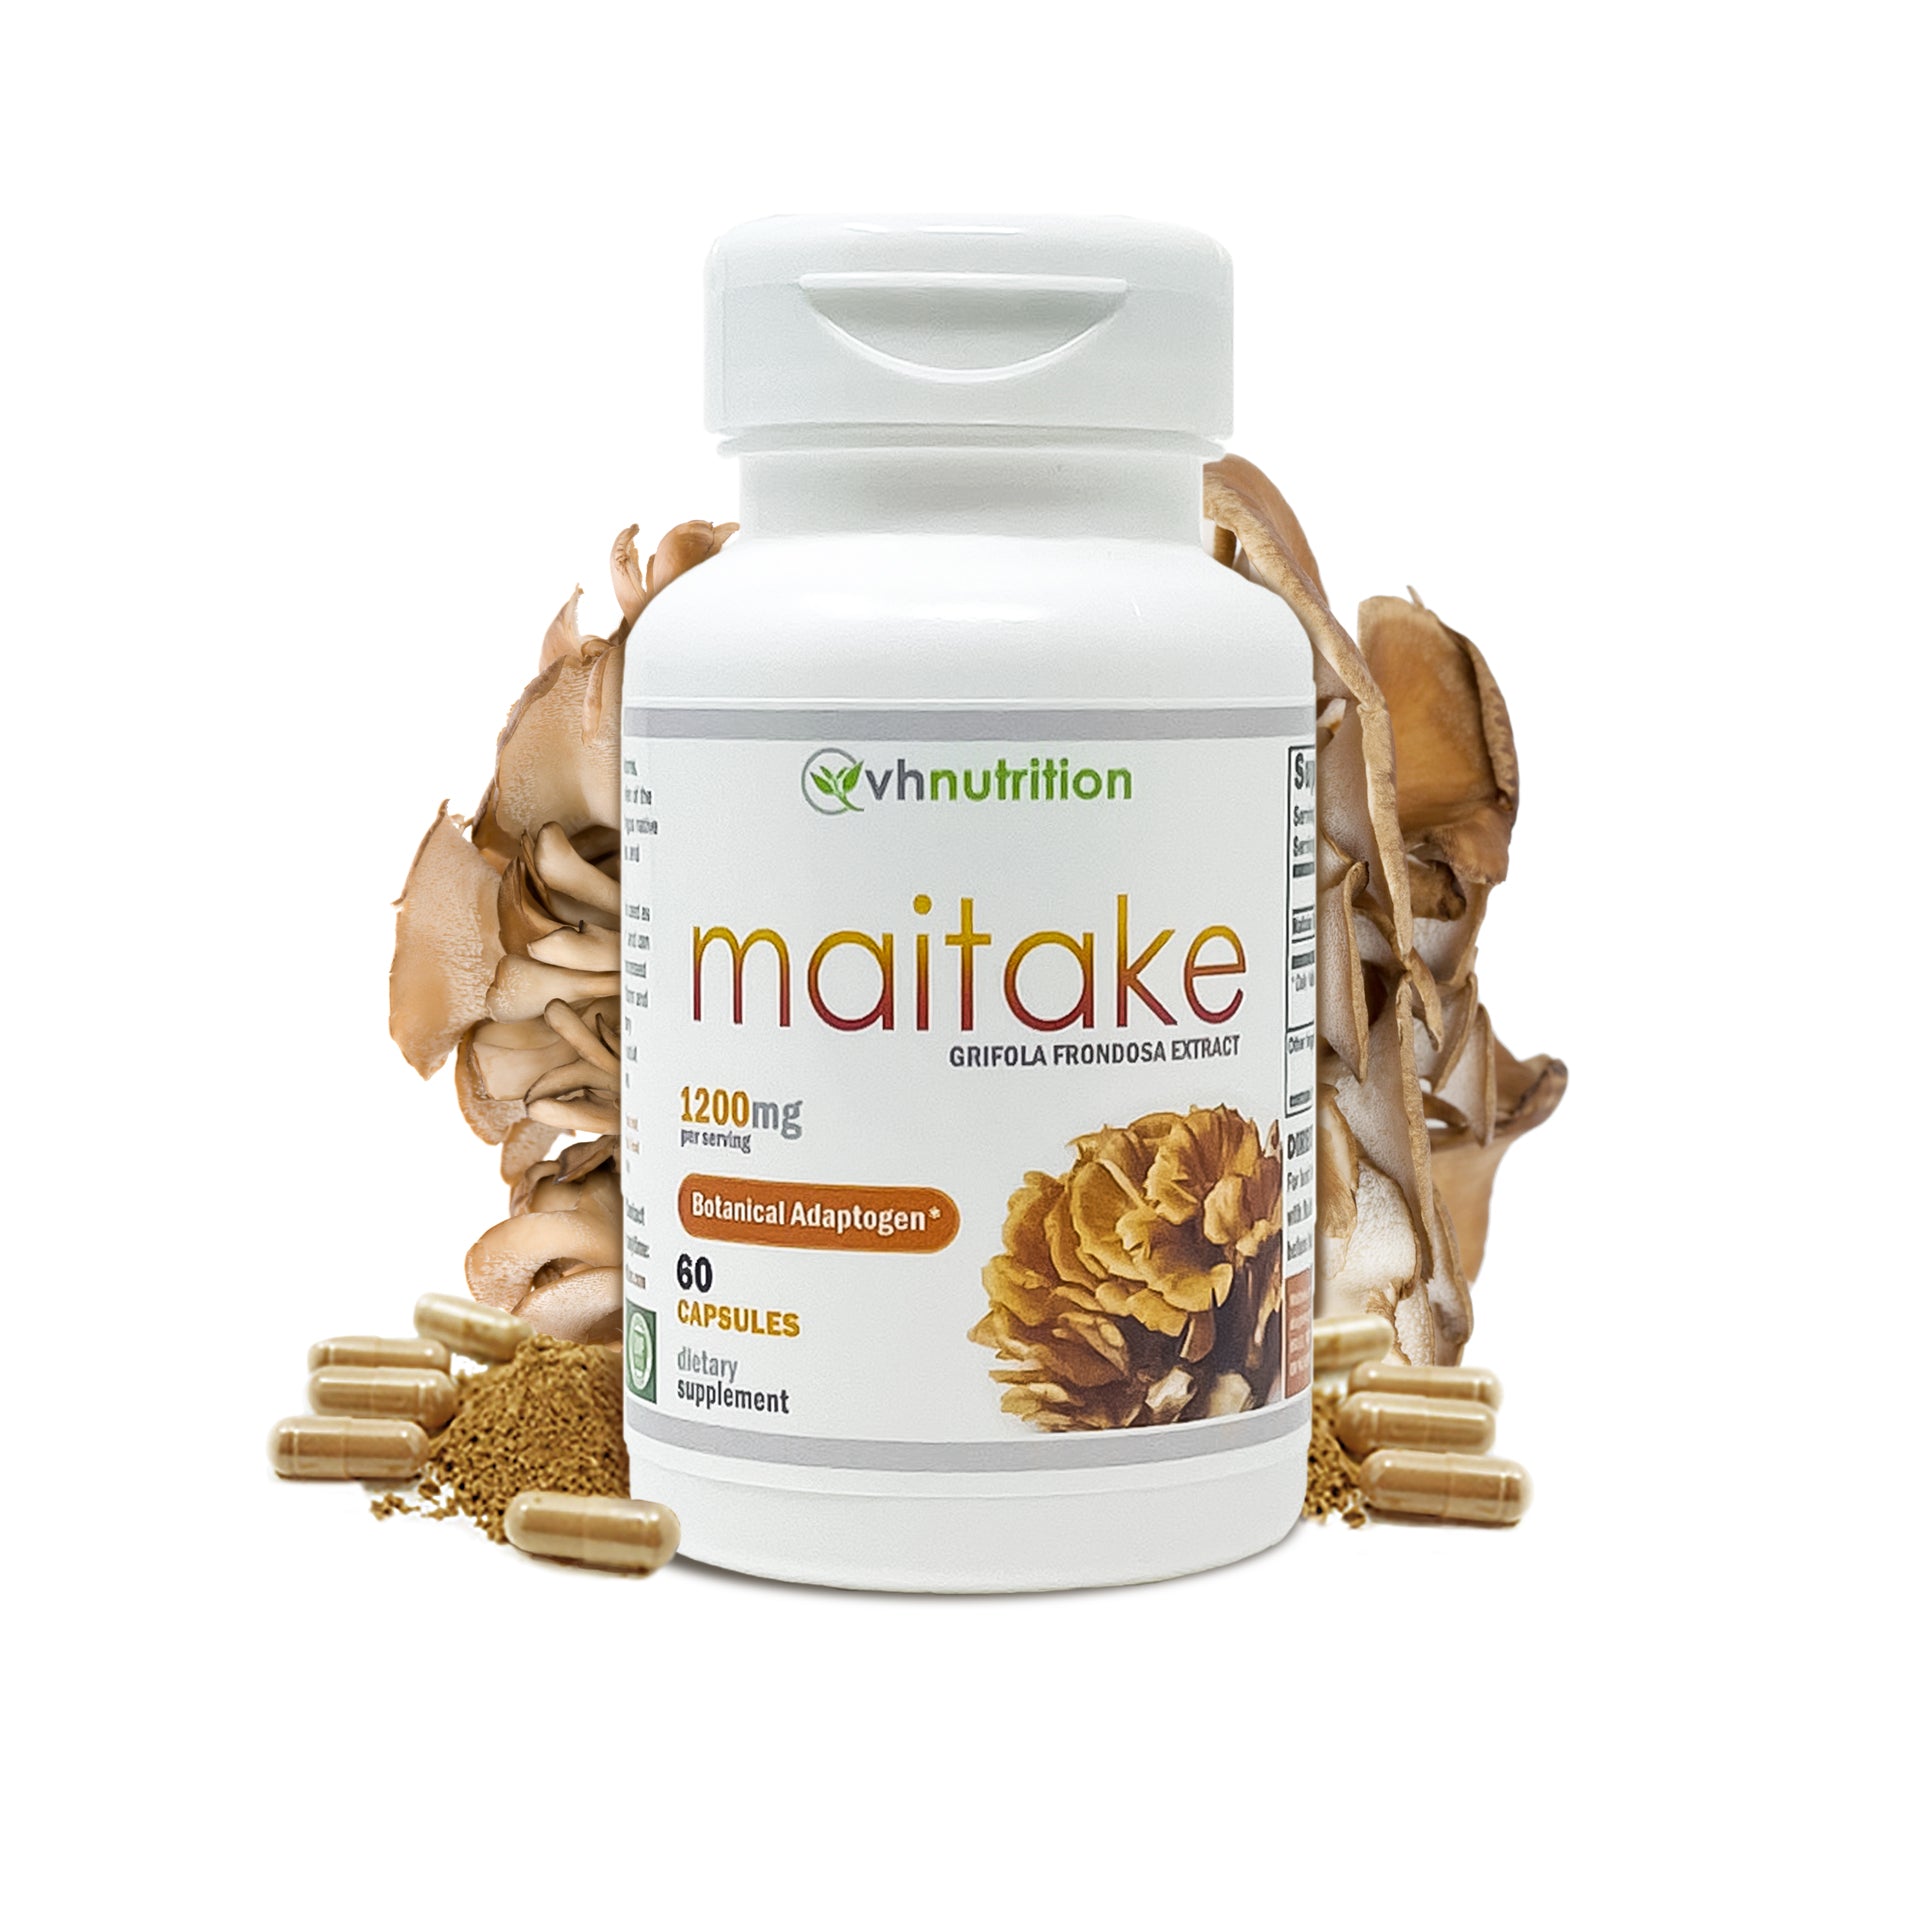 VH Nutrition MAITAKE MUSHROOM | Maitake mushroom capsules | 1200mg per serving 60 Capsules | Standardized Grifola frondosa Extract